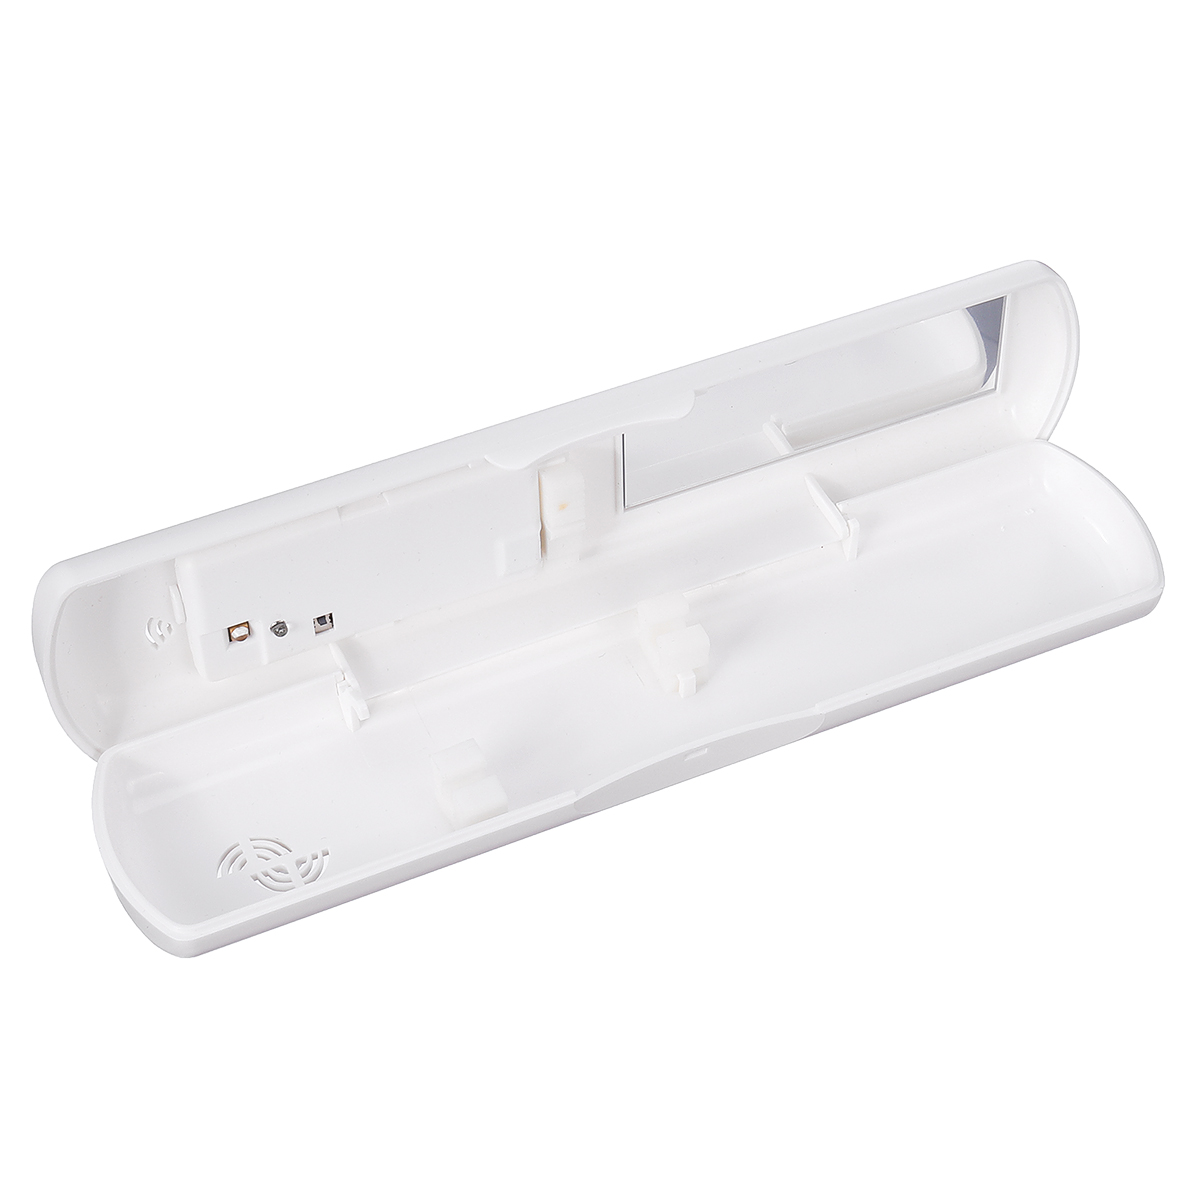 Portable-UV-Sanitizer-Toothbrush-Sterilizer-Holder-Disinfection-Box-Germ-Free-Dental-Care-1671679-8